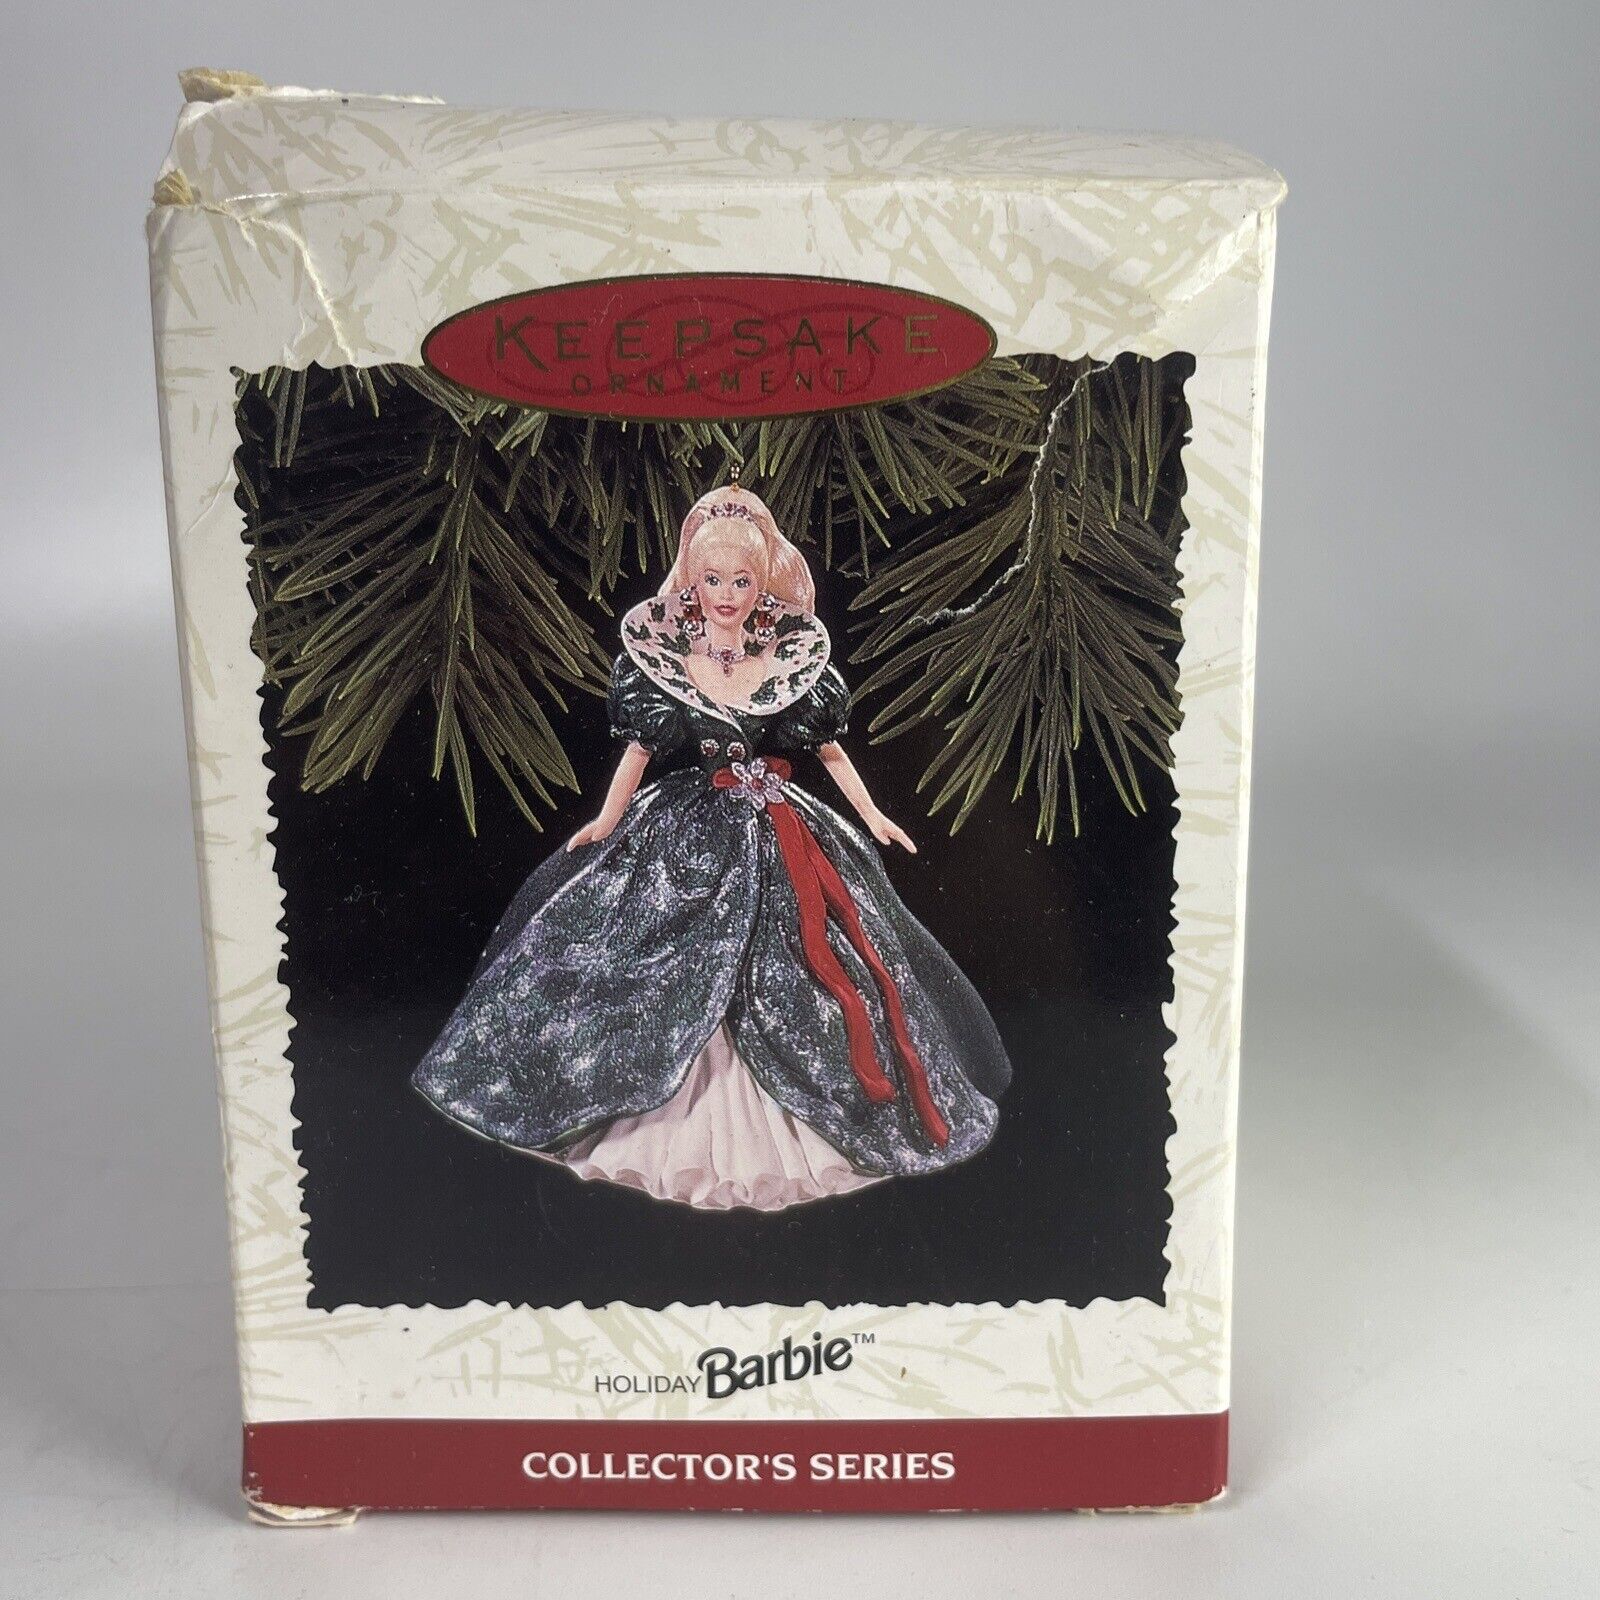 Vintage Barbie Hallmark Keepsake Holiday  Christmas Ornament 1995 3rd in Series 